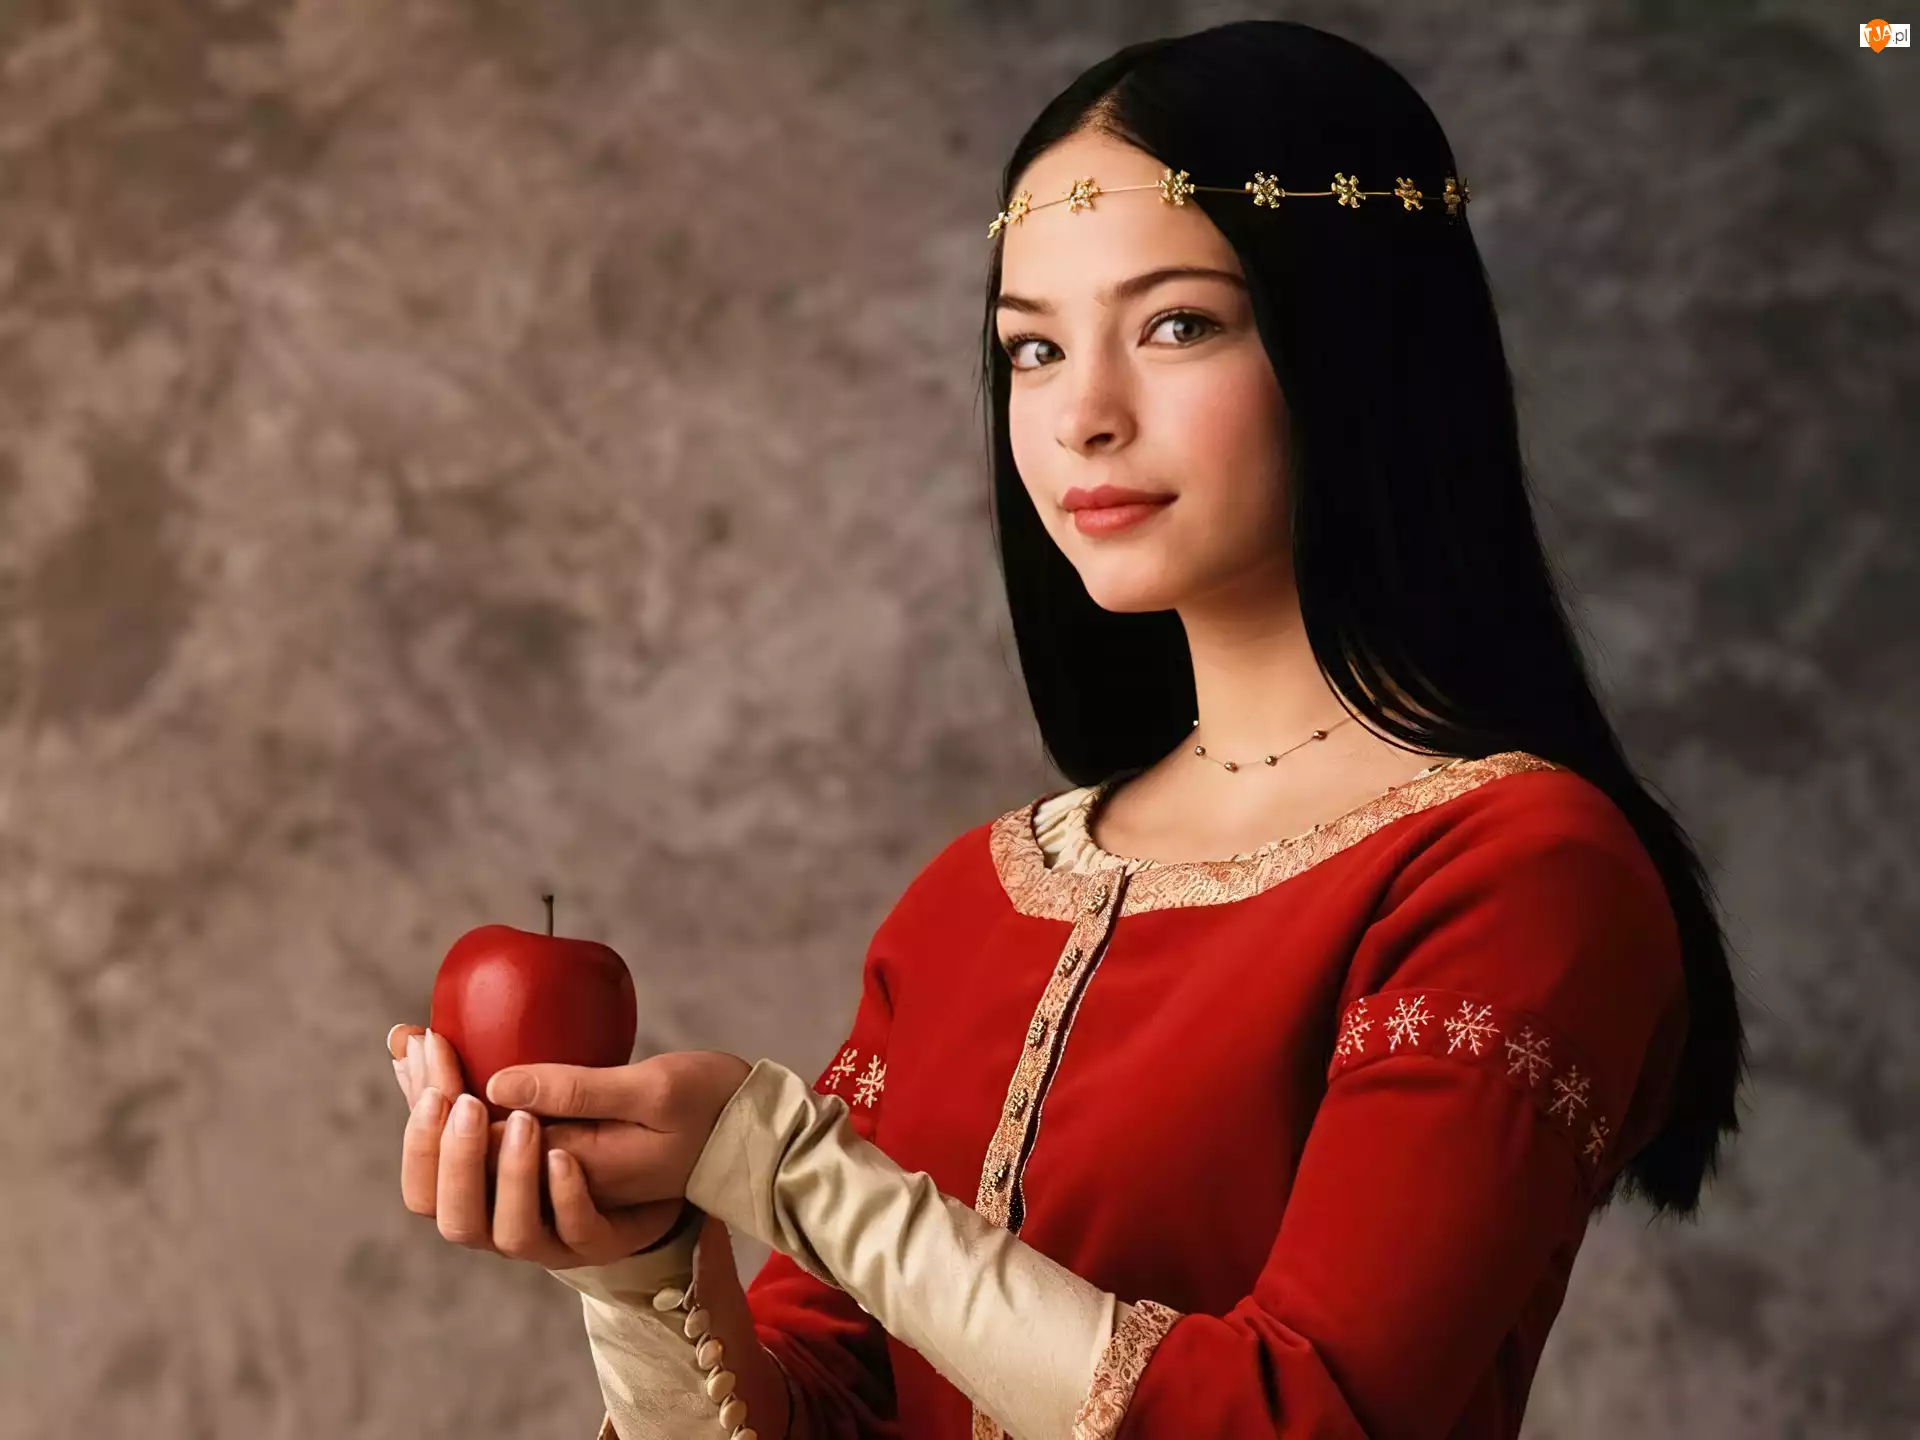 Jabłko, Kristin Kreuk